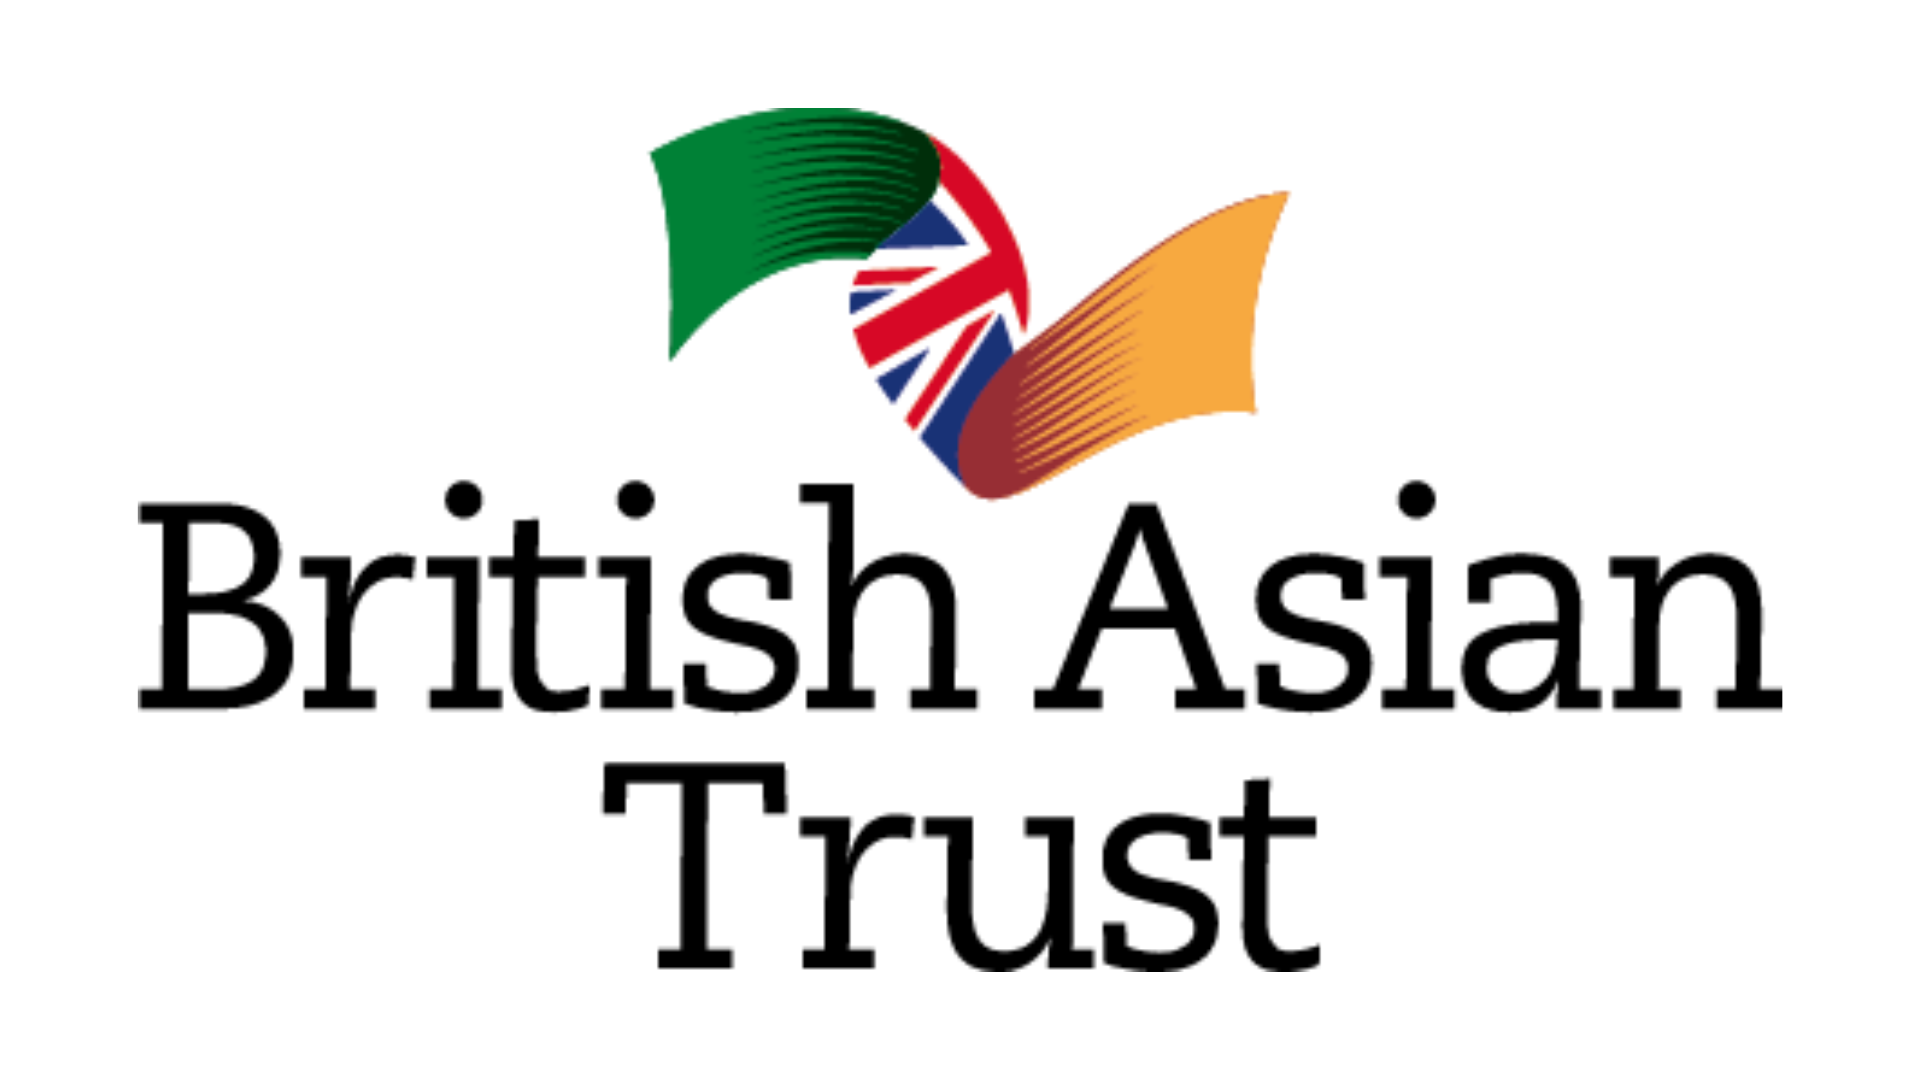 The British Asian Trust logo